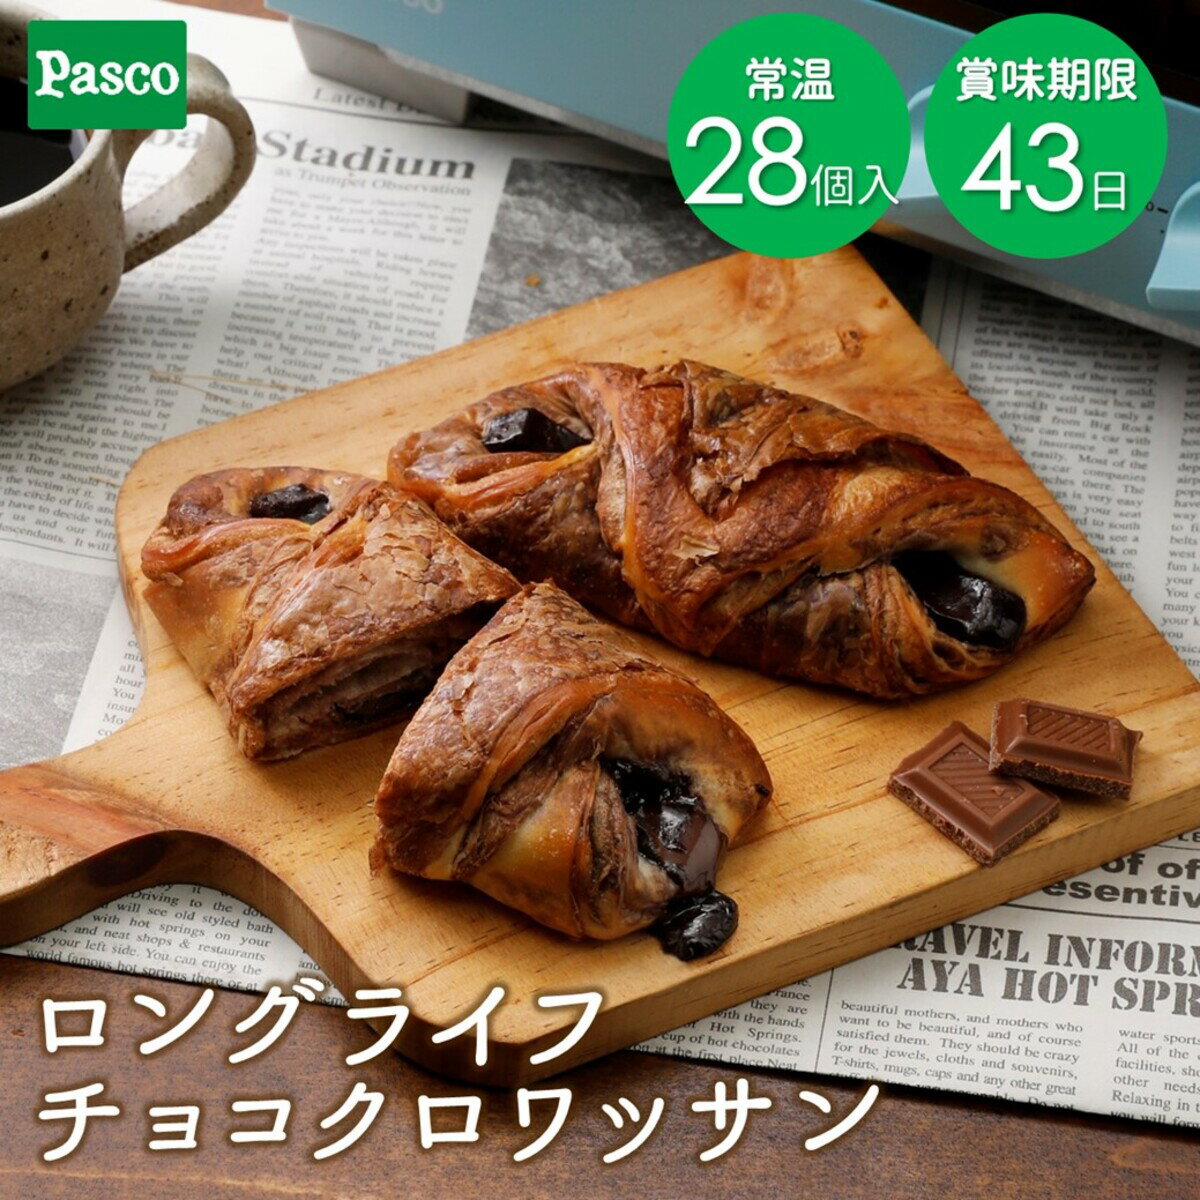 Pasco ロングライフ チョコクロワッサン 28個入| パスコ パン 菓子パン クロワッサン チョ ...